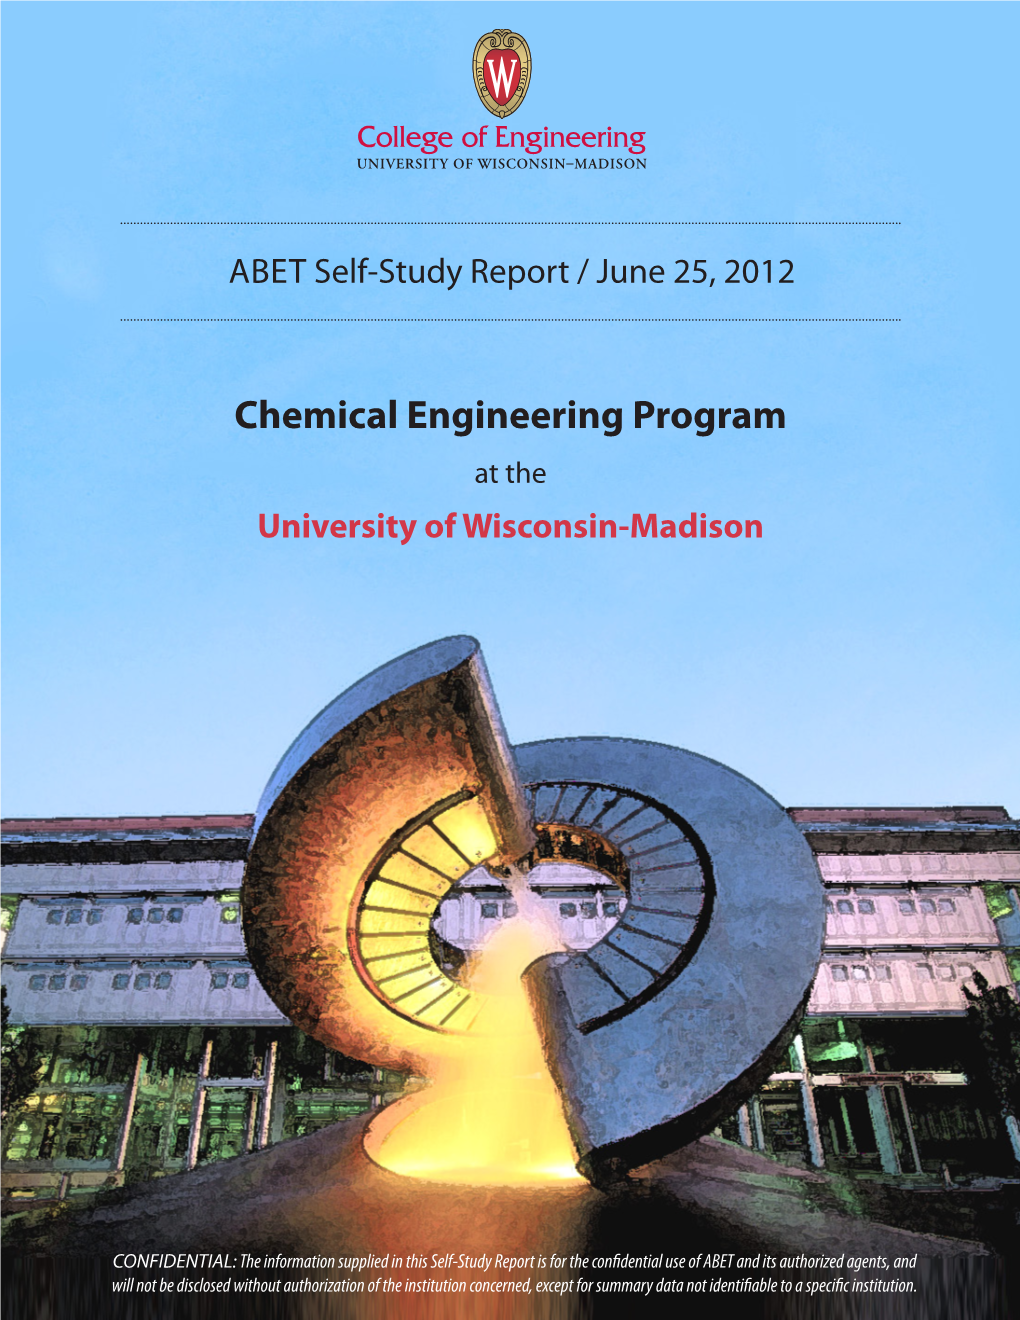 Chemical Engineering Program at the University of Wisconsin-Madison